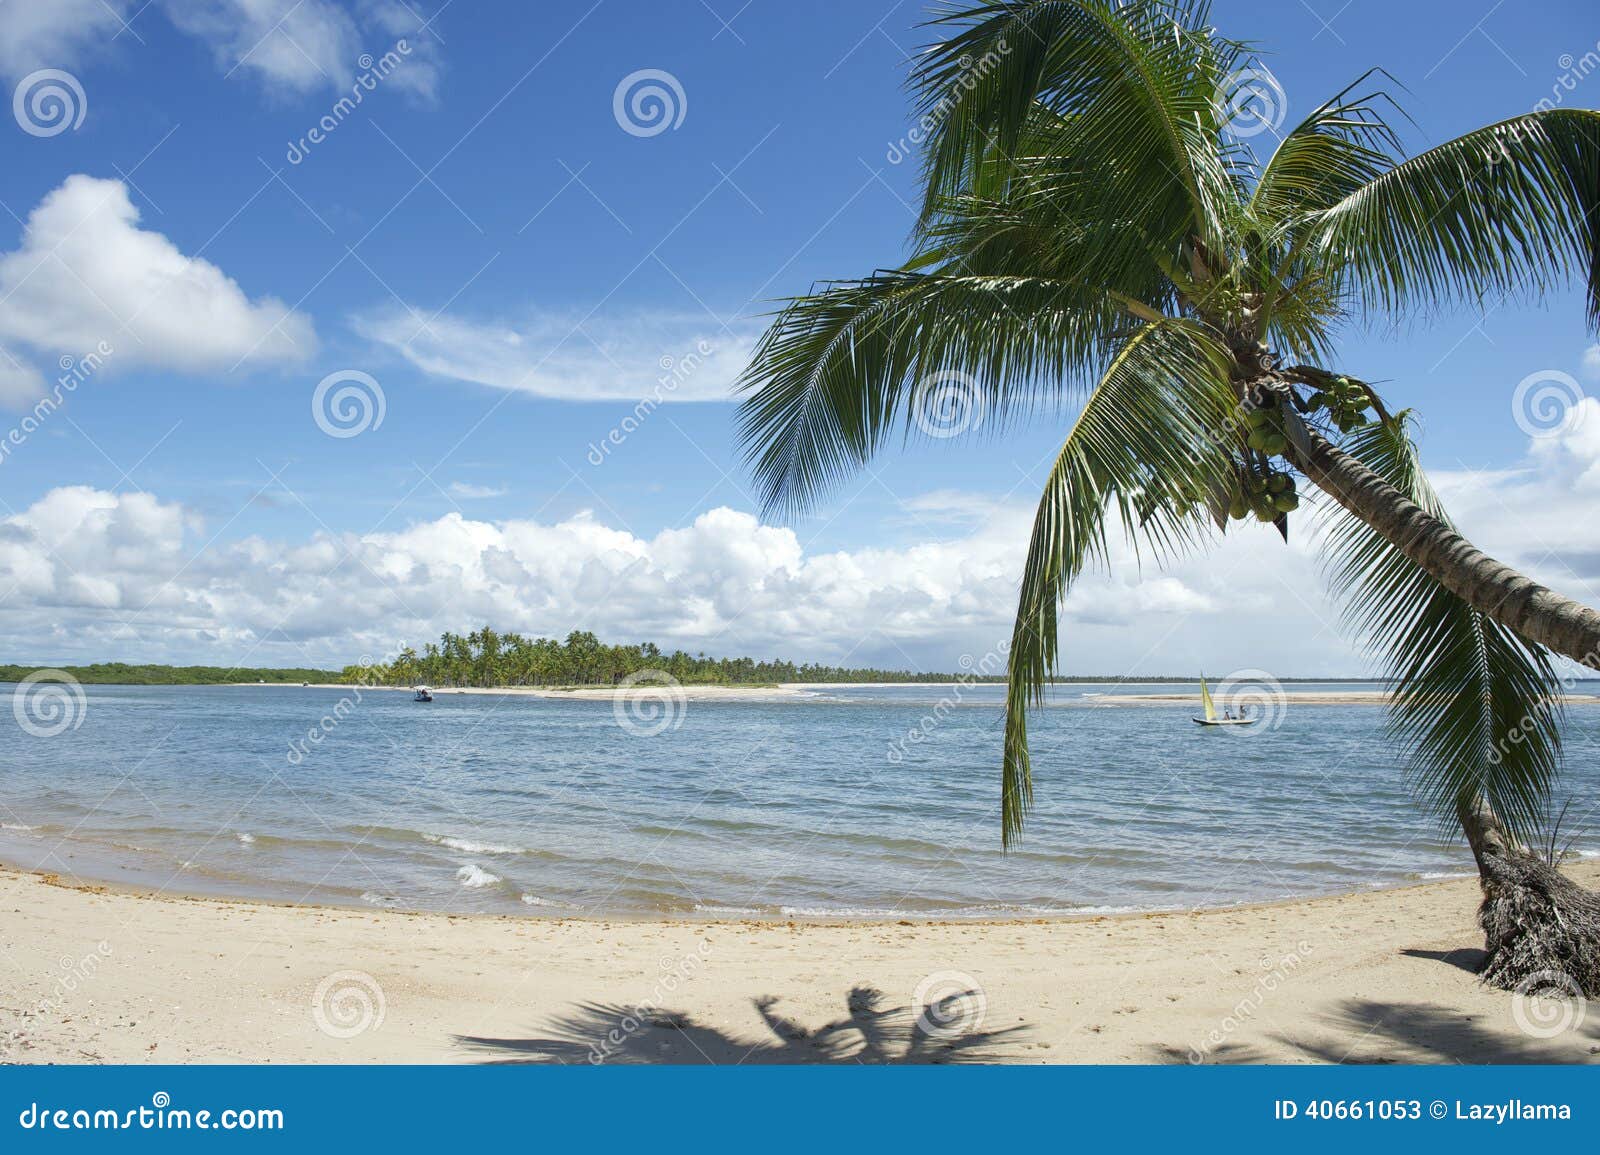 brazil beach palm tree nordeste bahia